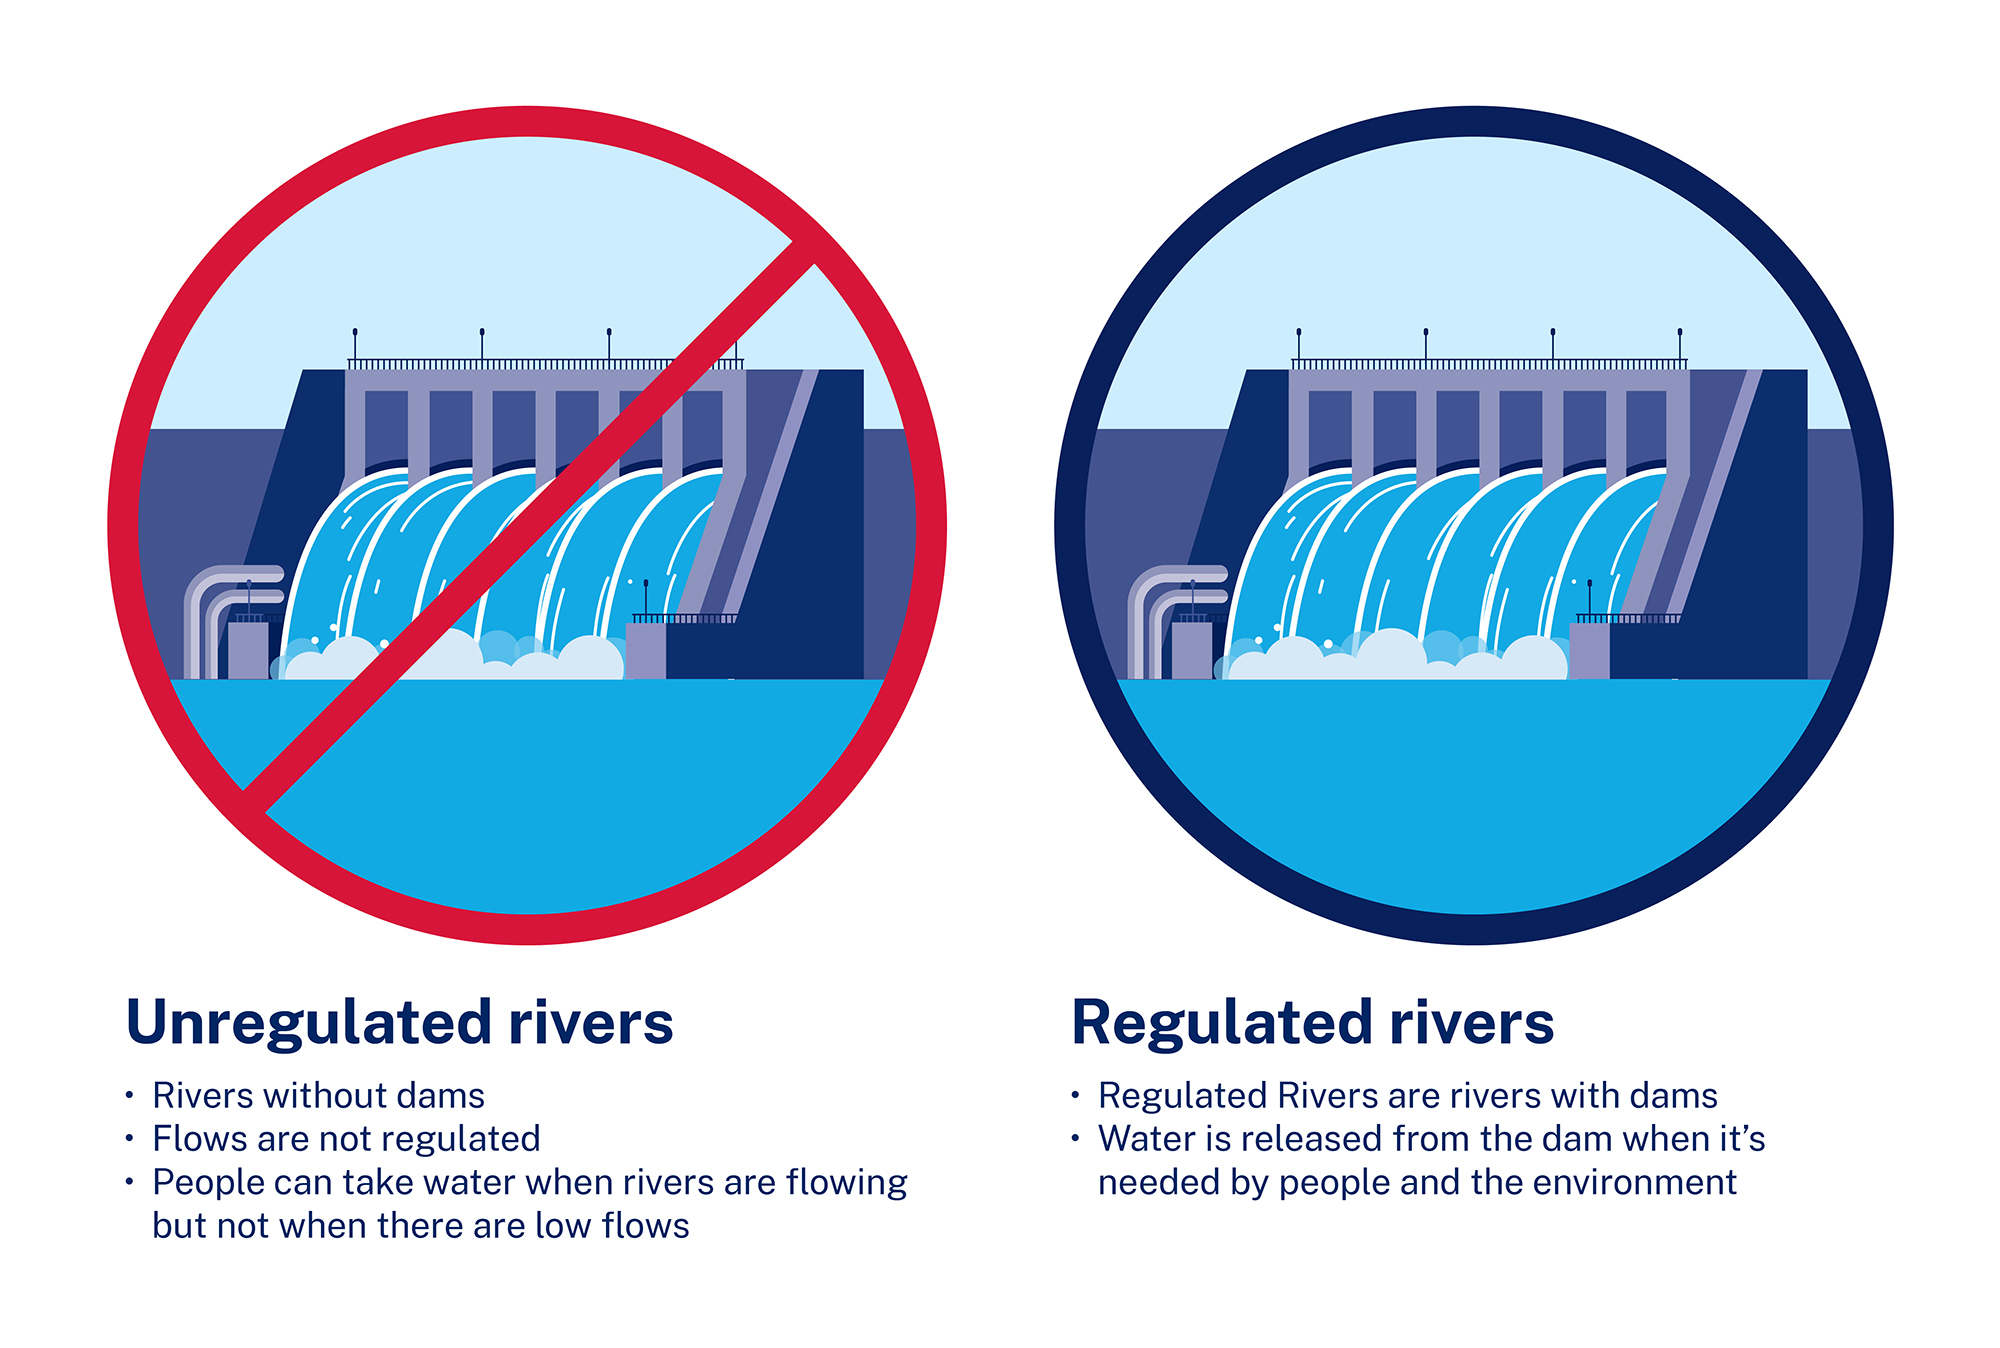 Regulated versus unregulated rivers 